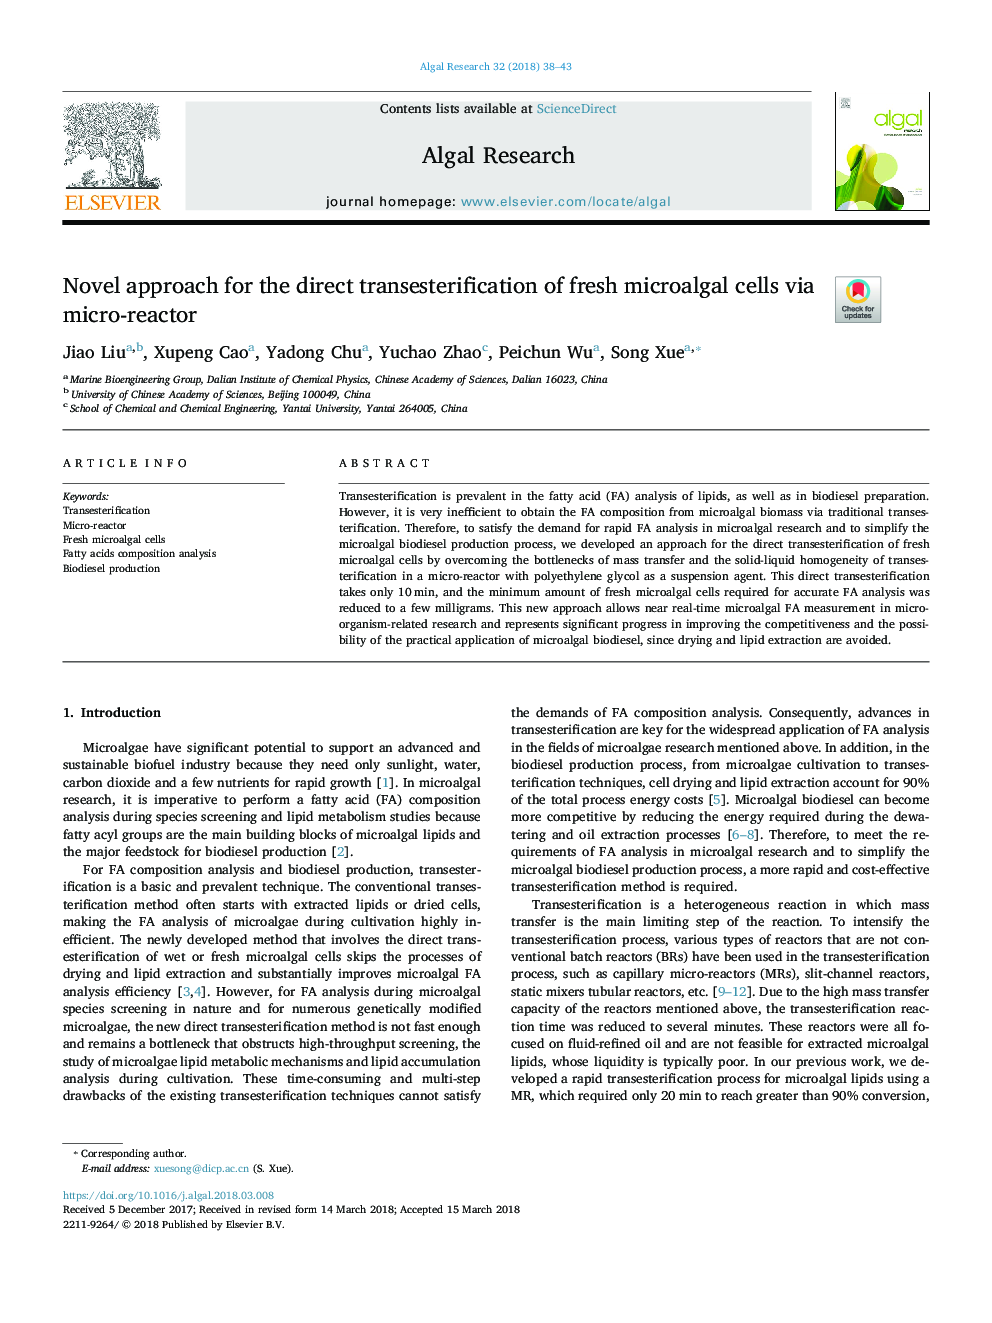 Novel approach for the direct transesterification of fresh microalgal cells via micro-reactor